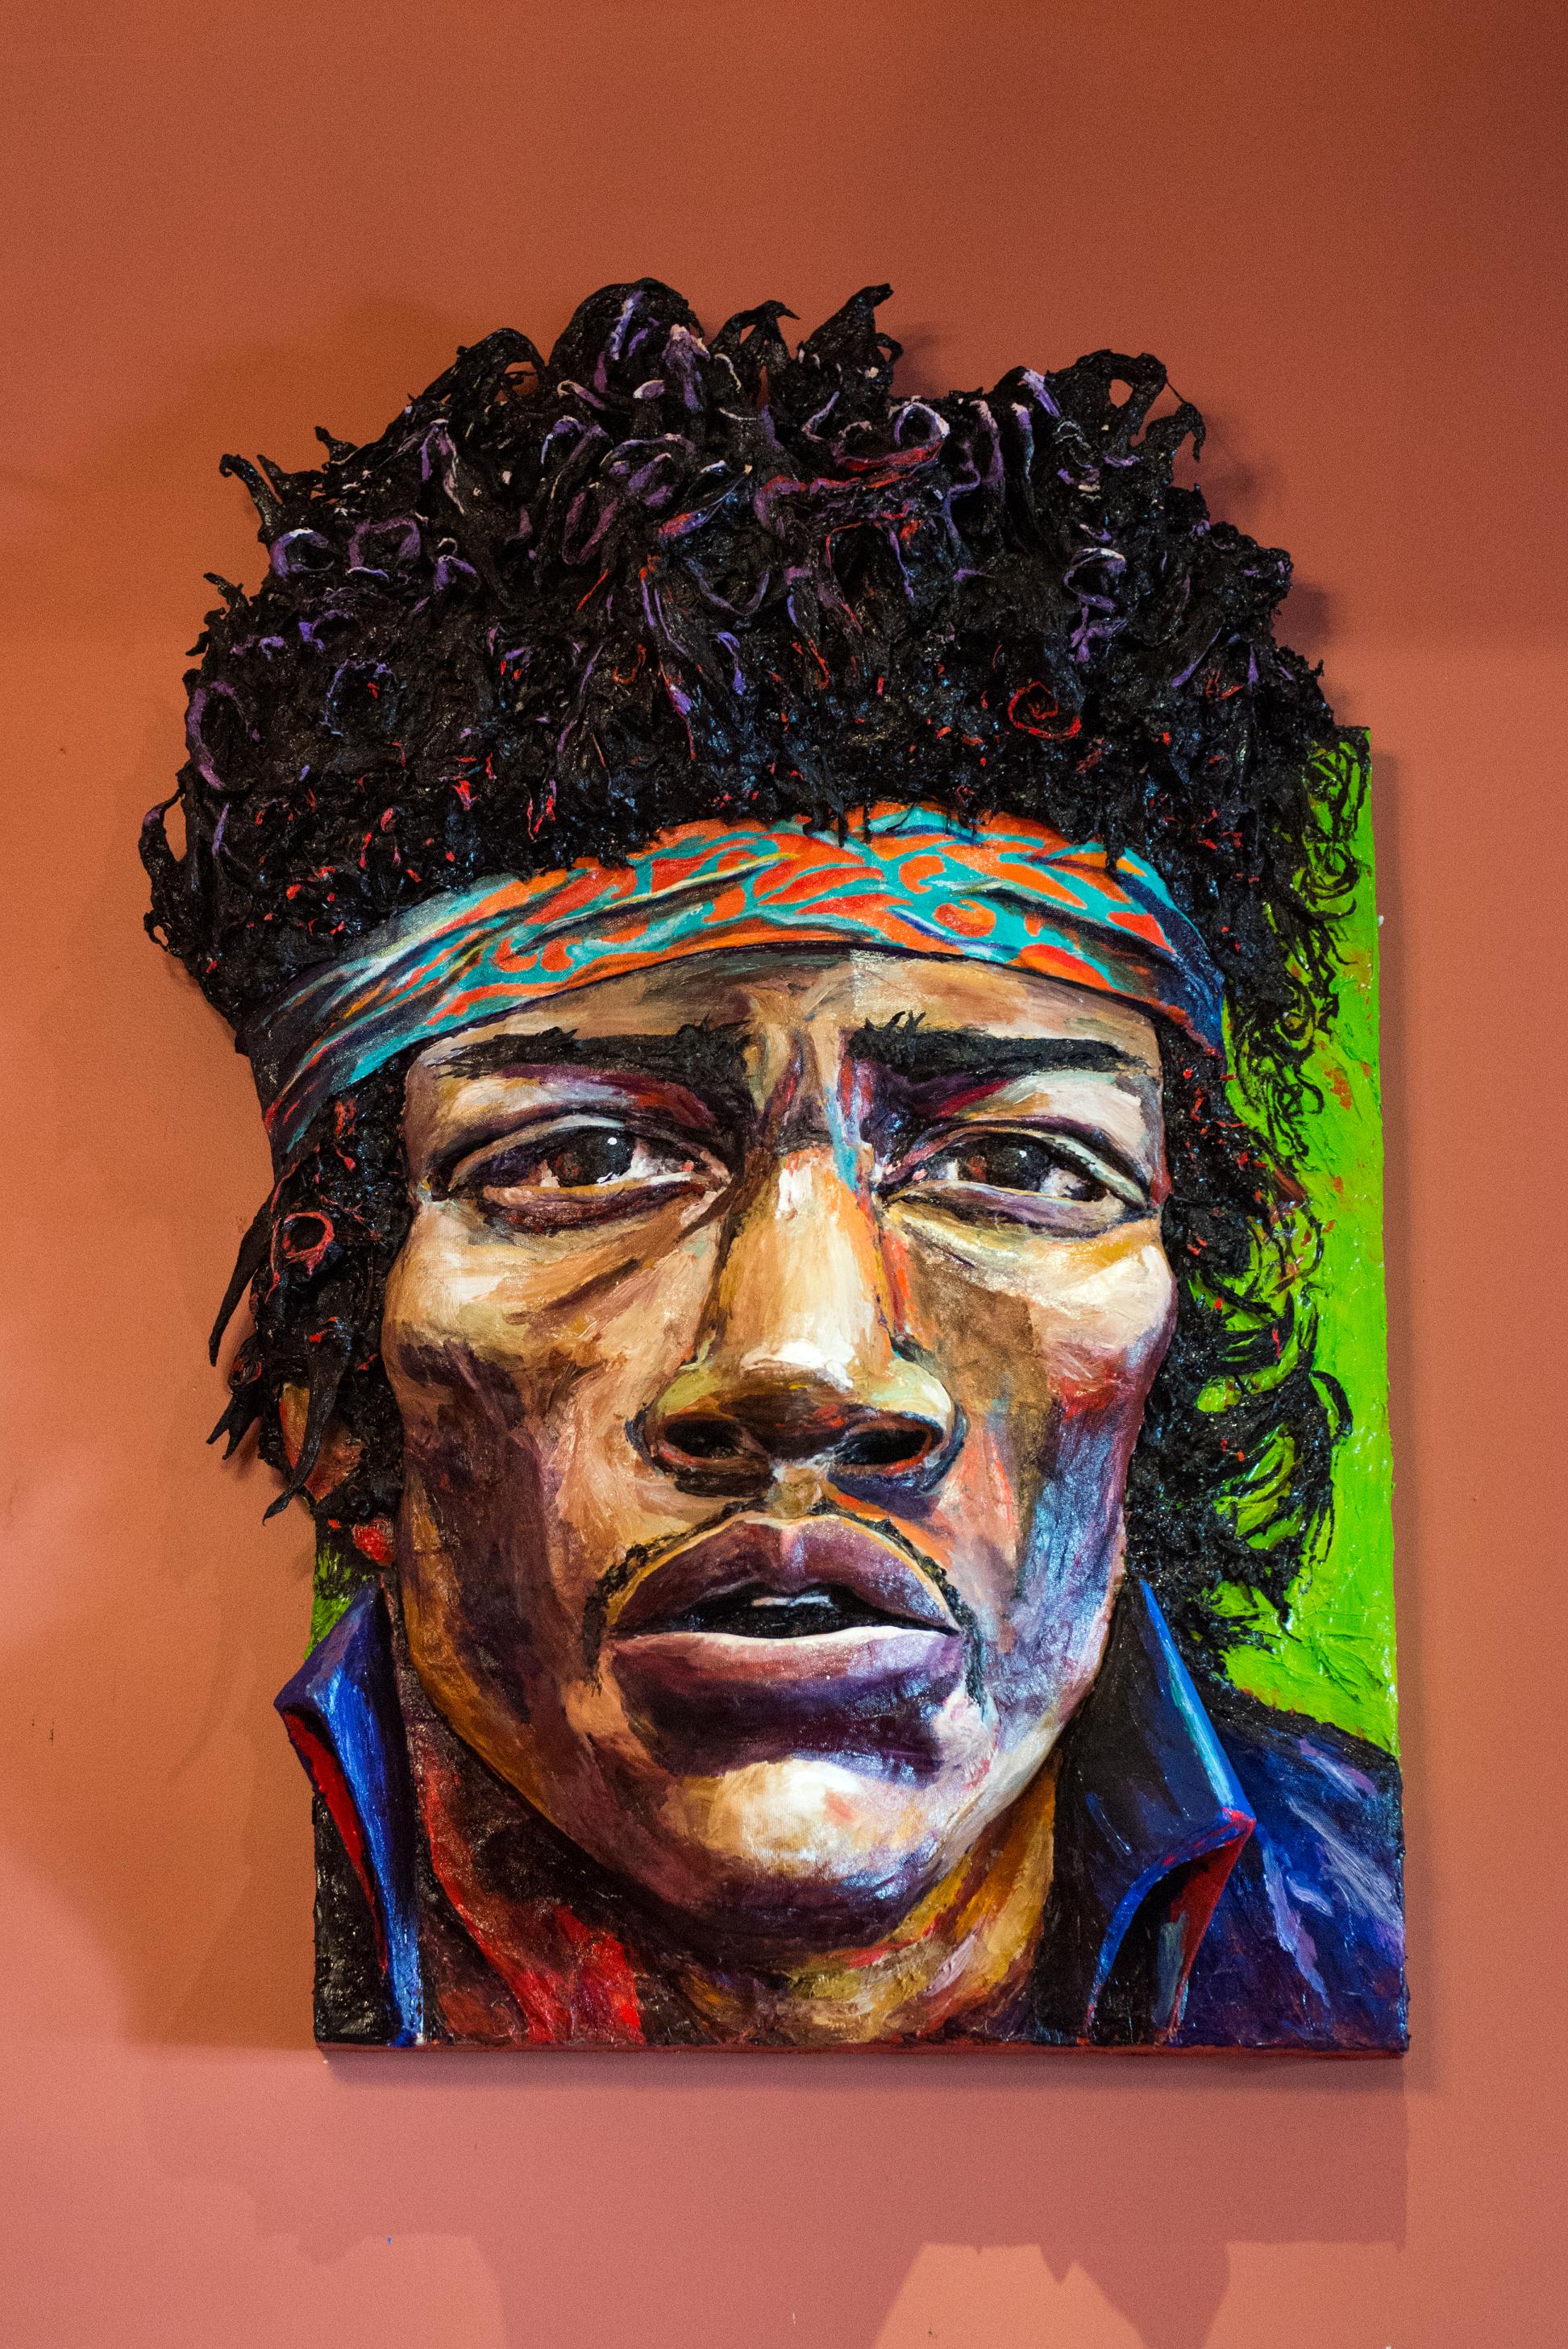 Built-Out Portrait of Jimi Hendrix by Artist Brett Stuart Wilson